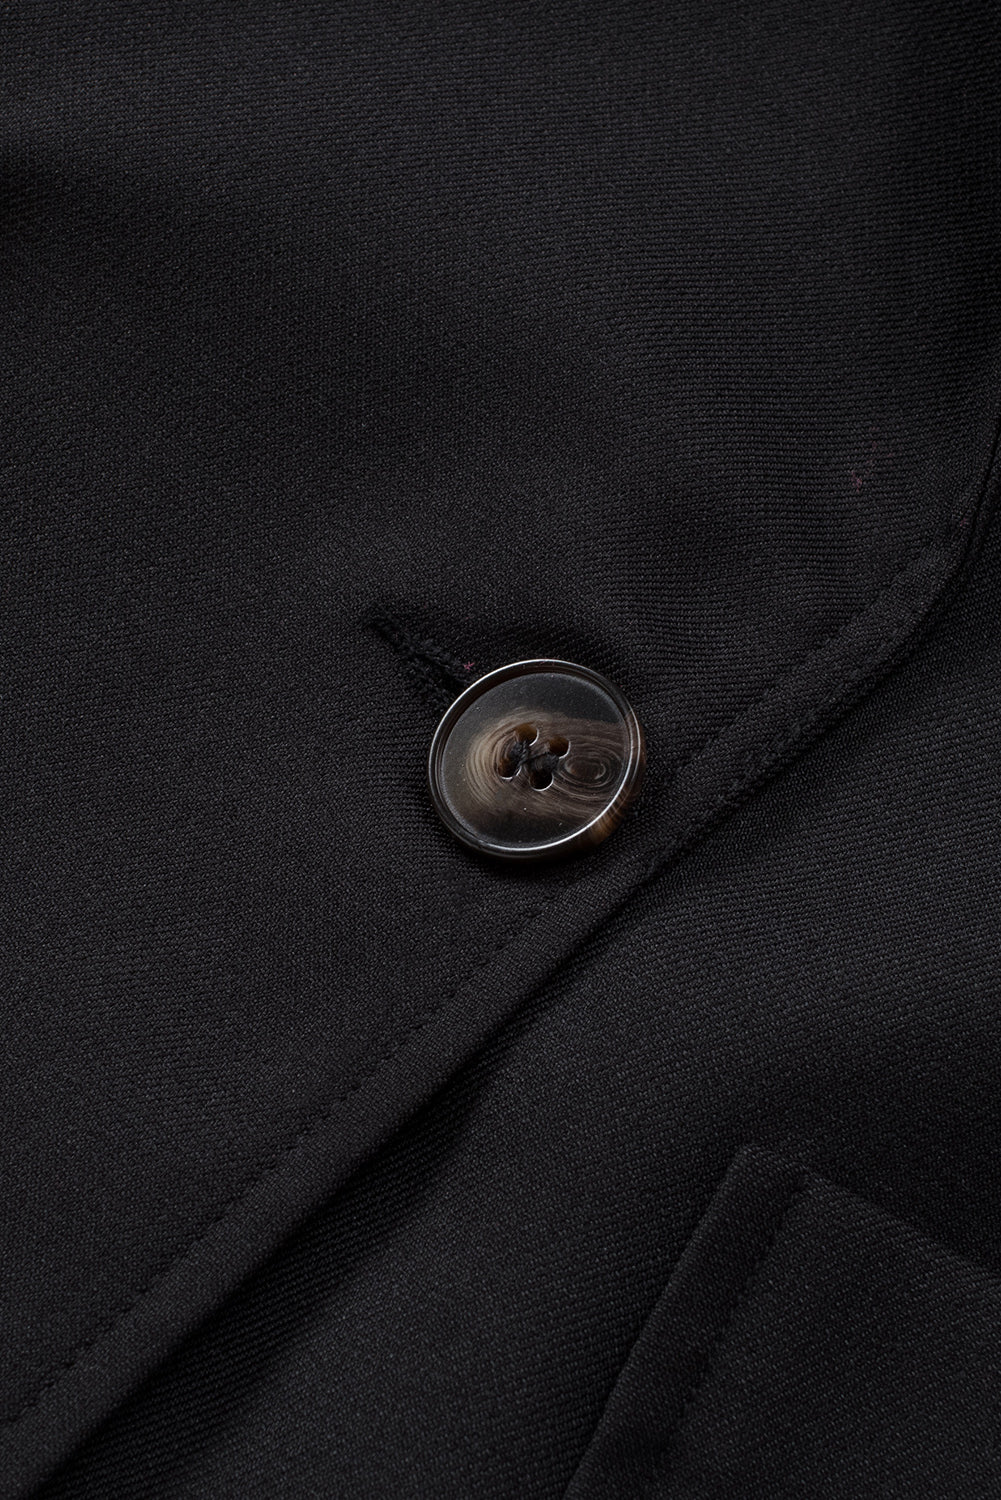 Črn blazer z ovratnikom z gumbi in žepom